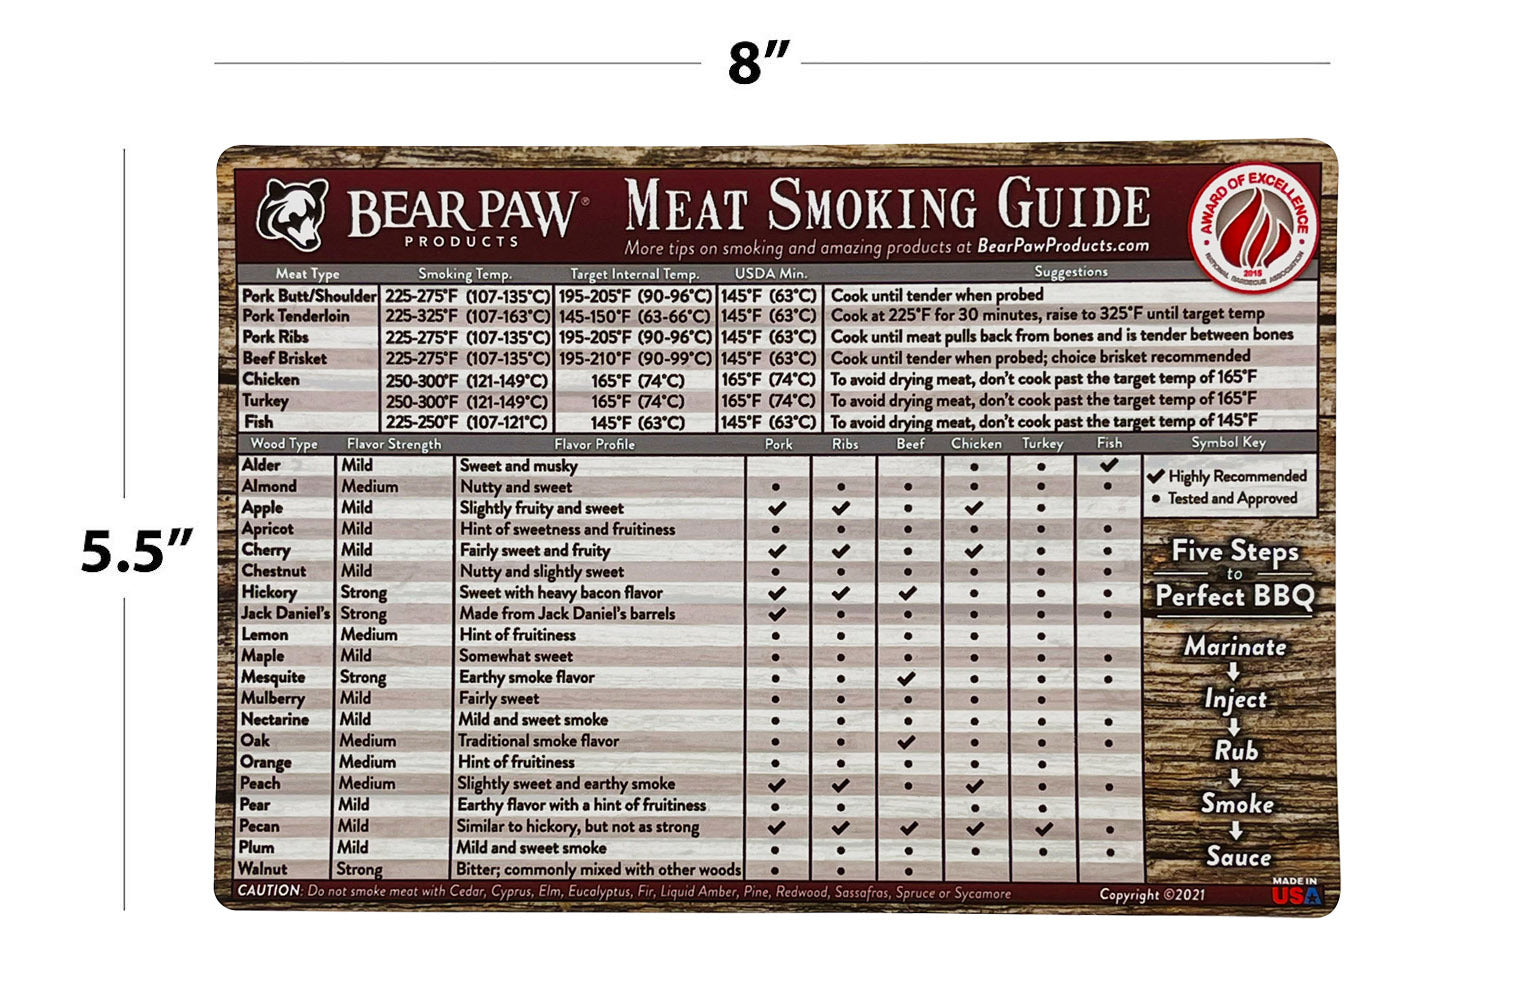 Best Meat Smoking Guide Magnet 46 Meats BBQ Pellet Grill Smoker